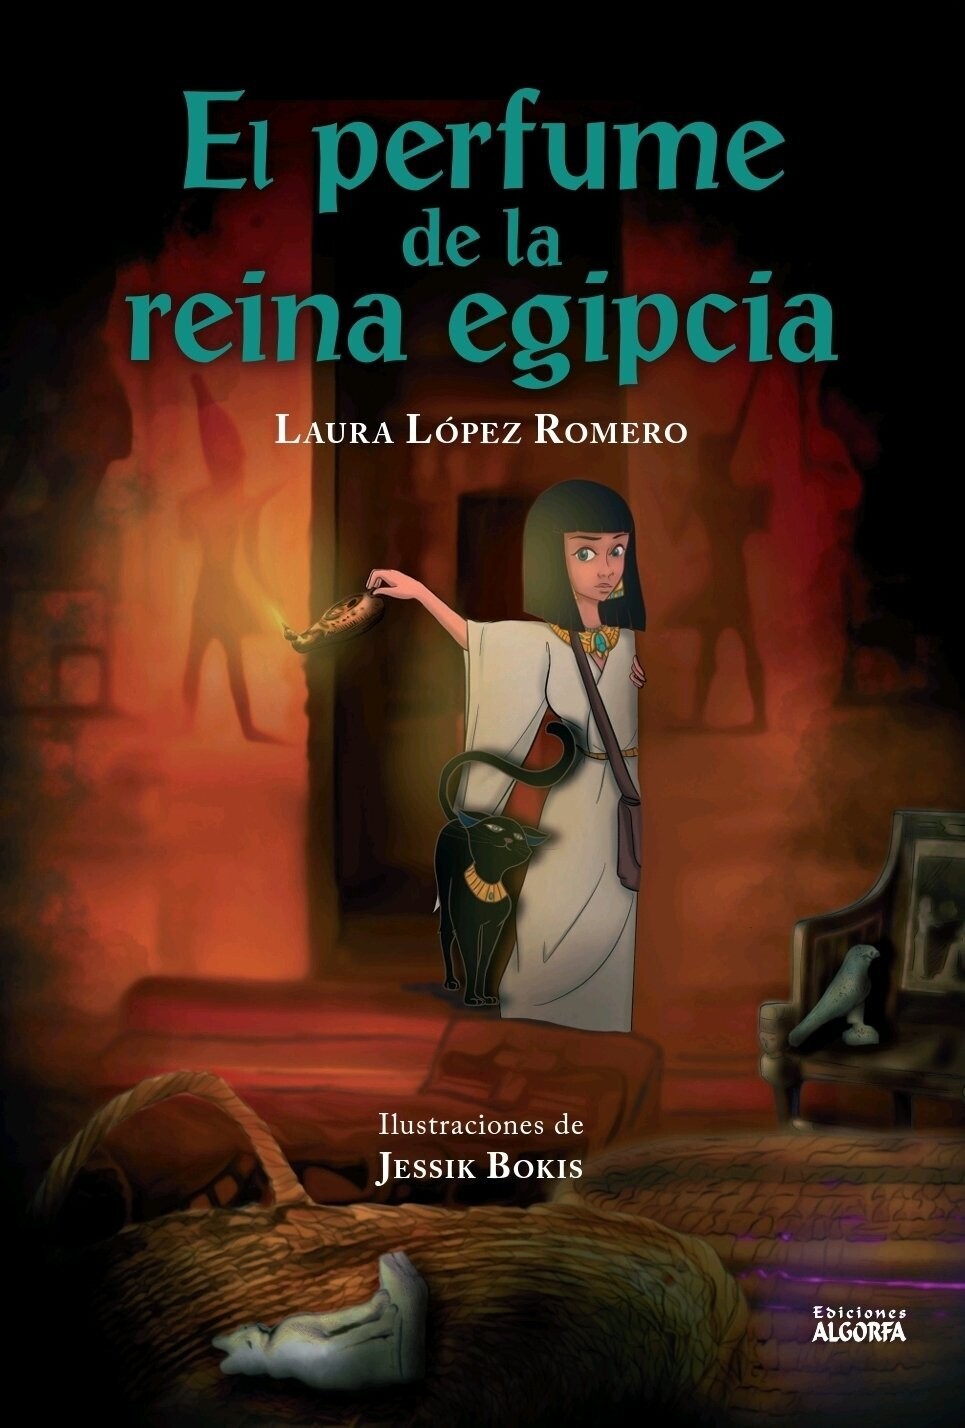 EL PERFUME DE LA REINA EGIPCIA. Laura López Romero